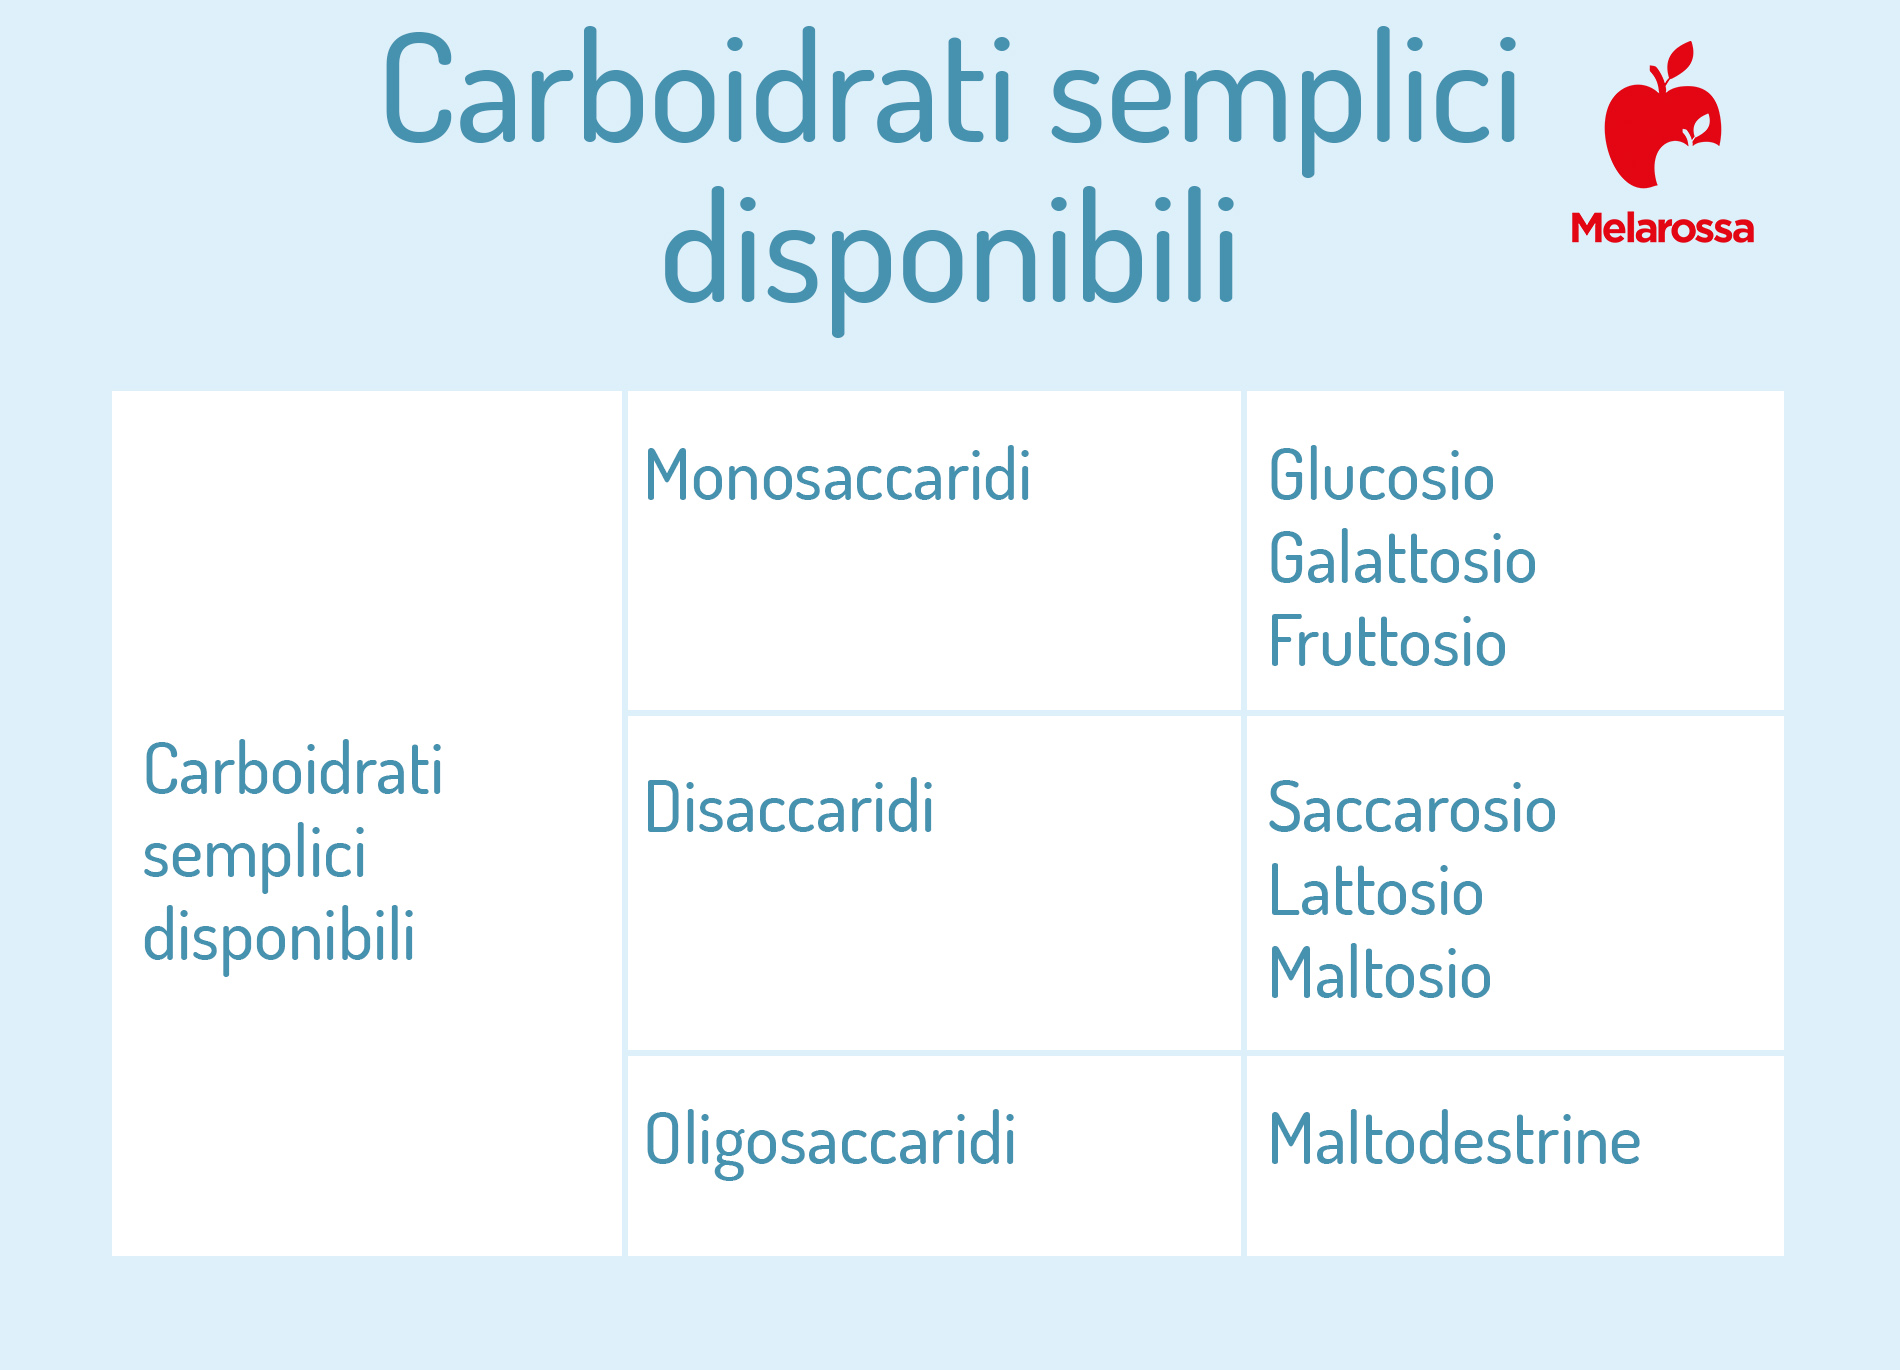 glucosio: carboidrati semplici